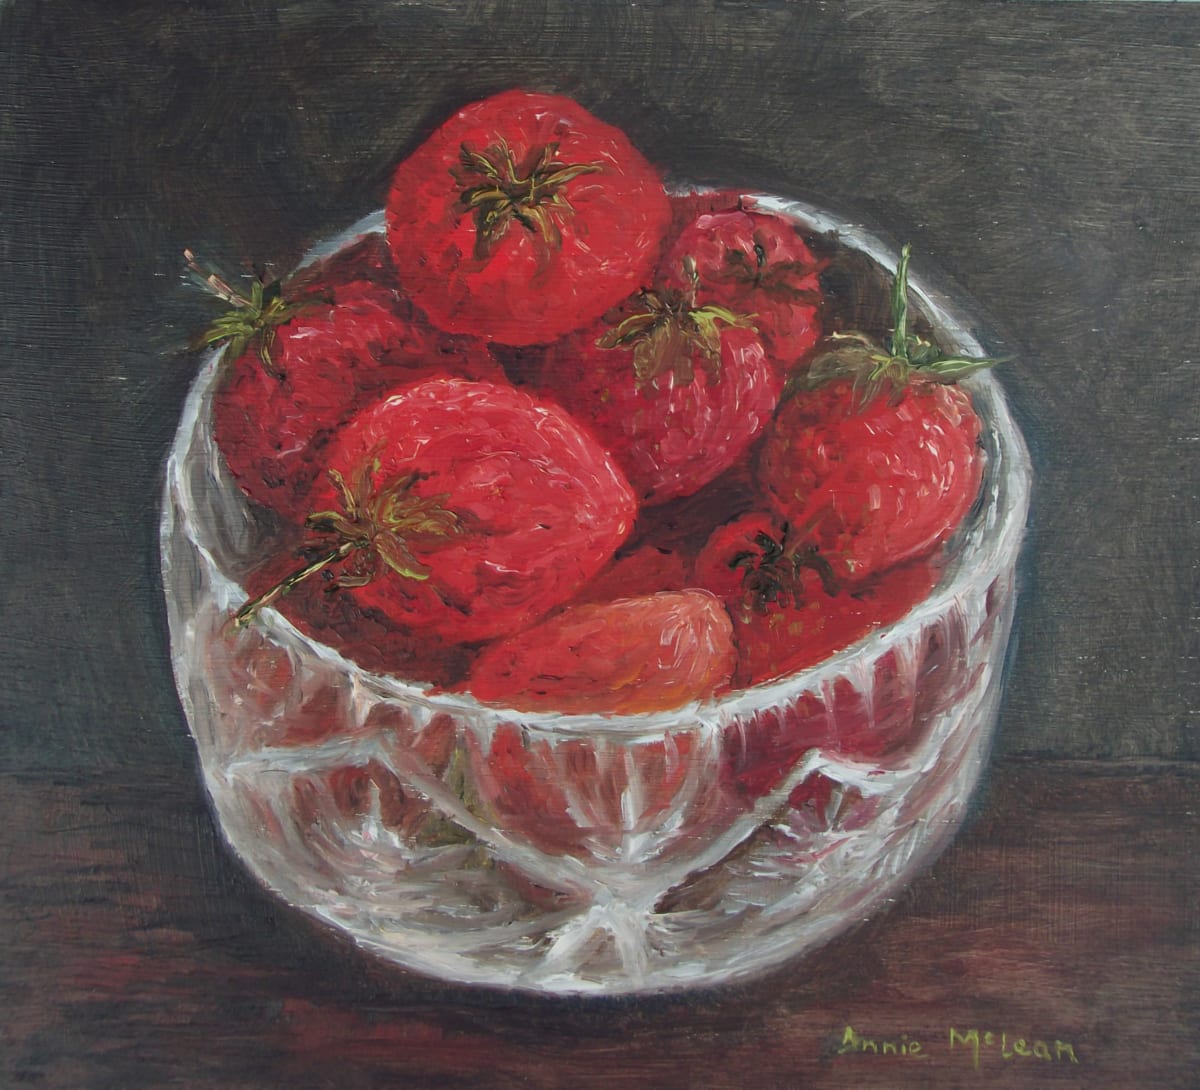 First Pickings - Strawberries by Annie McLean  Image: FIRST PICKINGS - STRAWBERRIES by Annie McLean